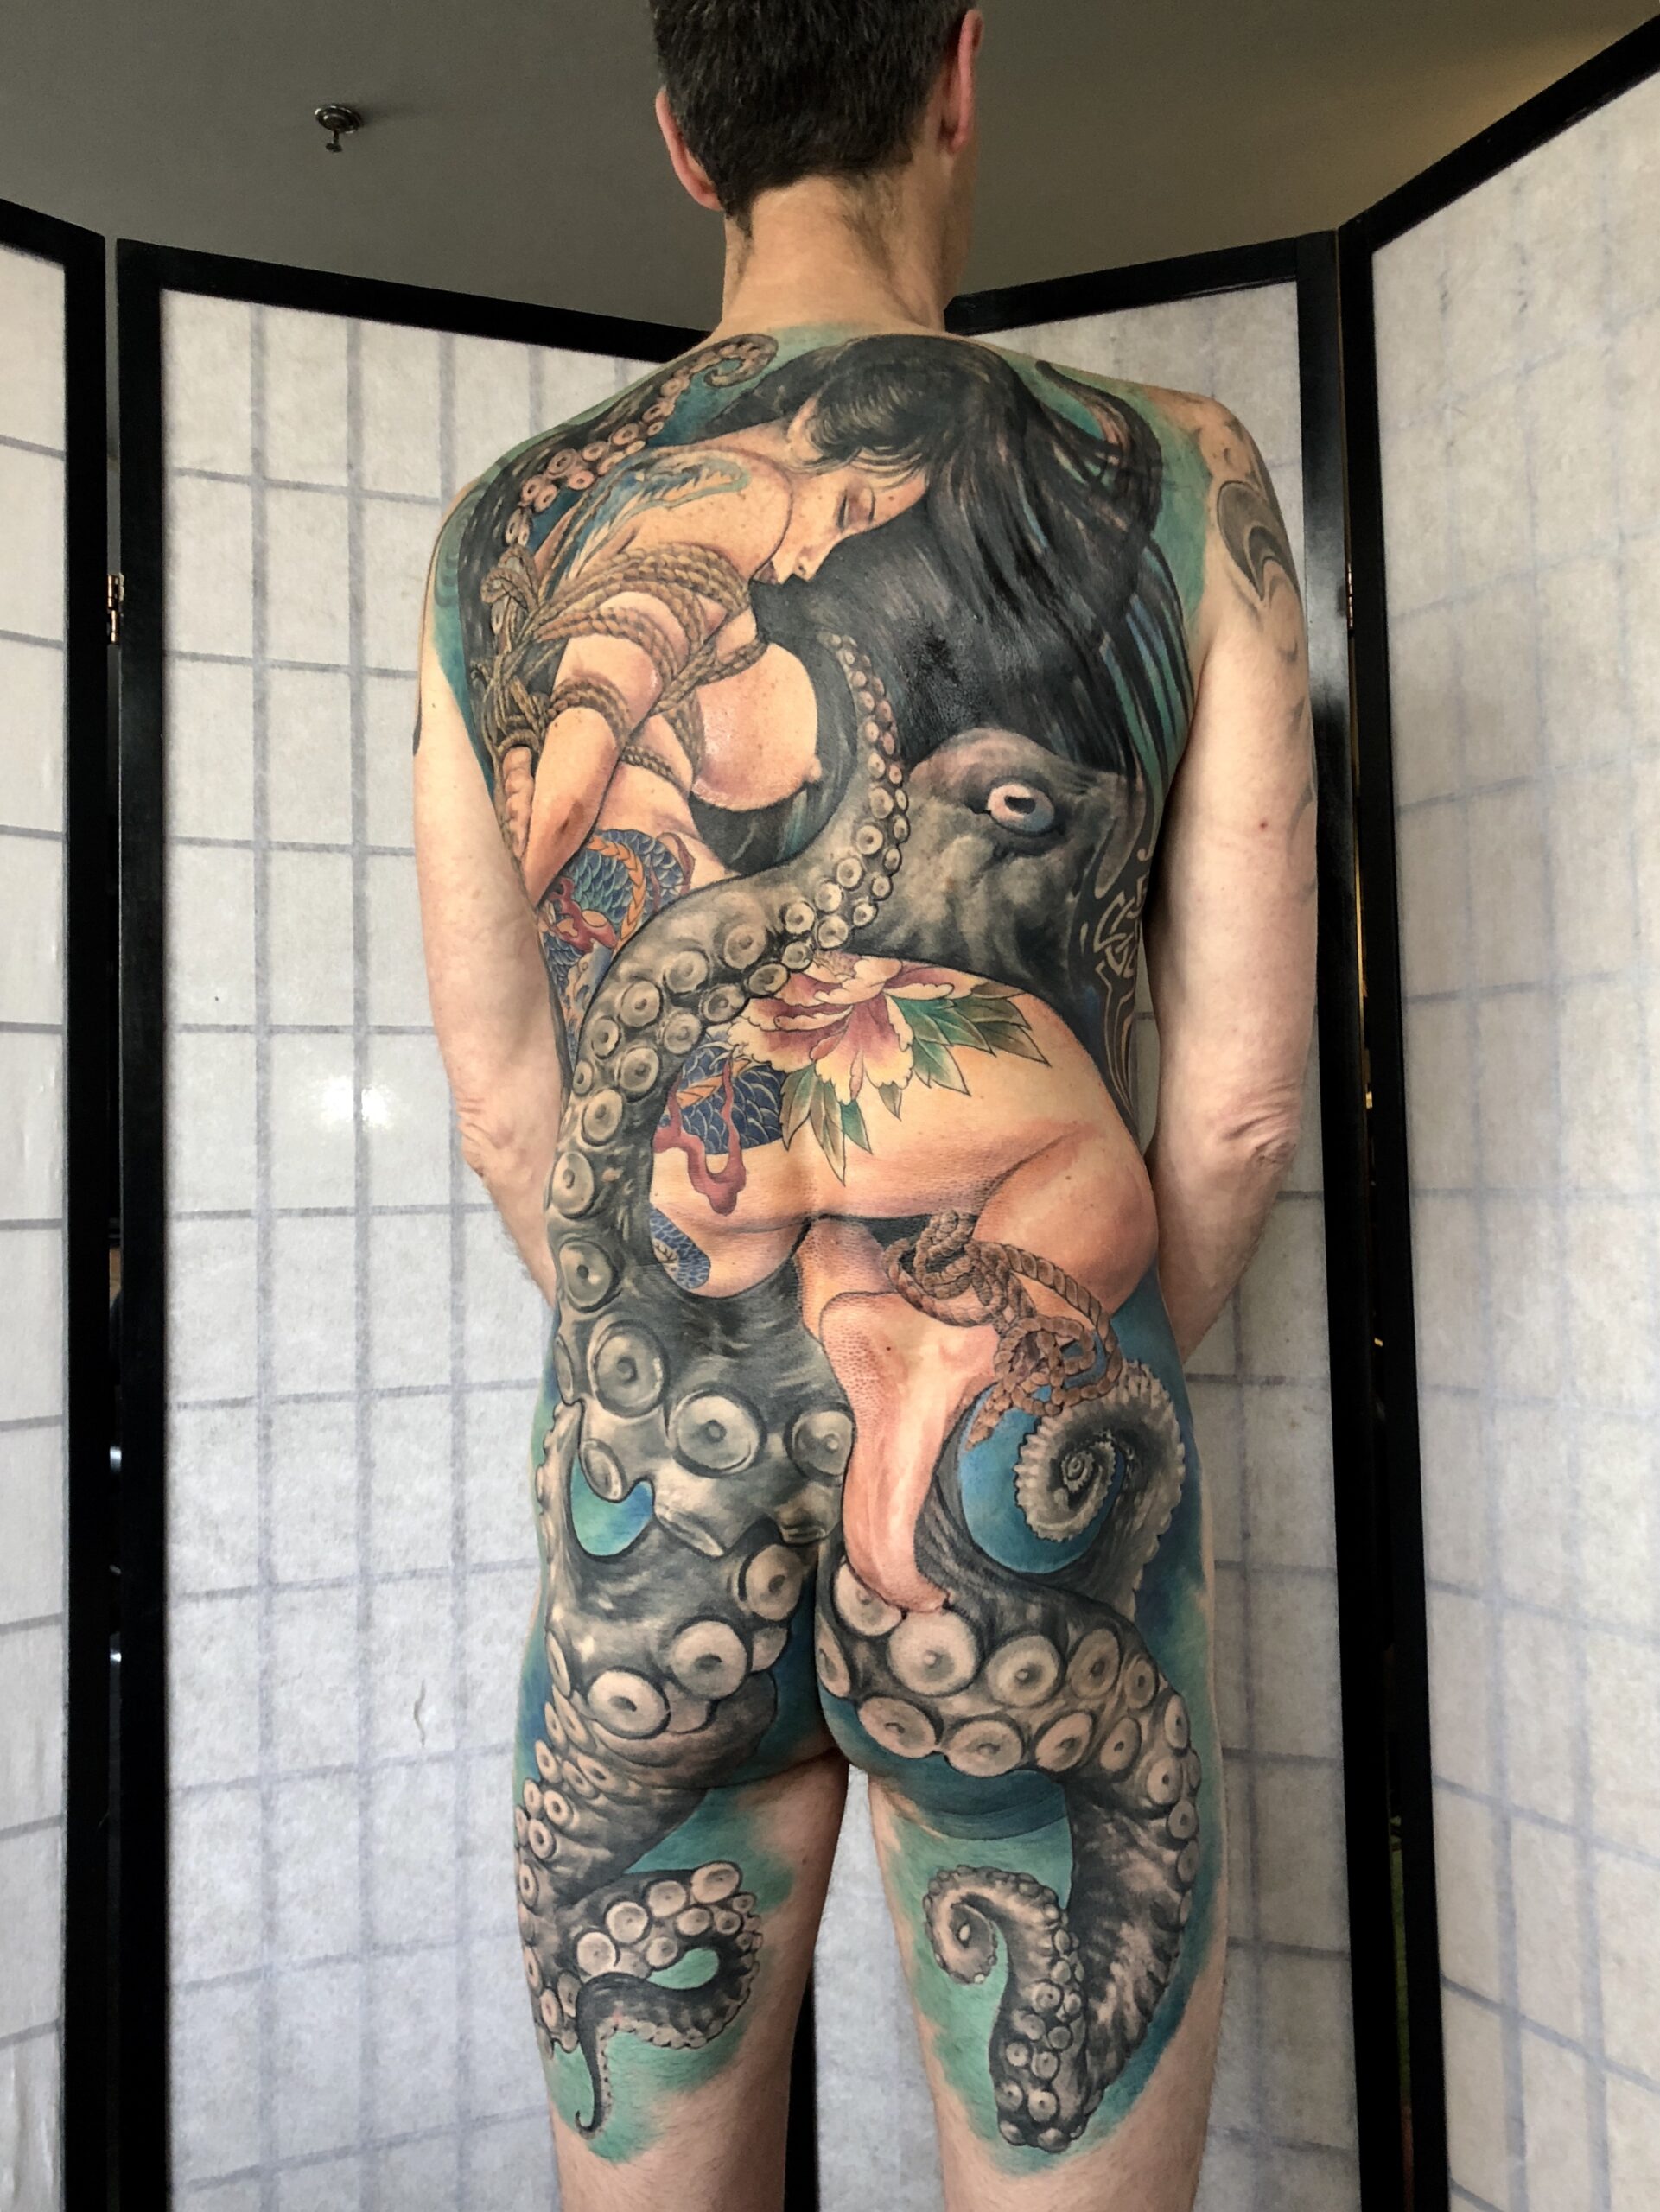 zhuo dan ting tattoo work 卓丹婷纹身作品 full back geisha tattoo 2